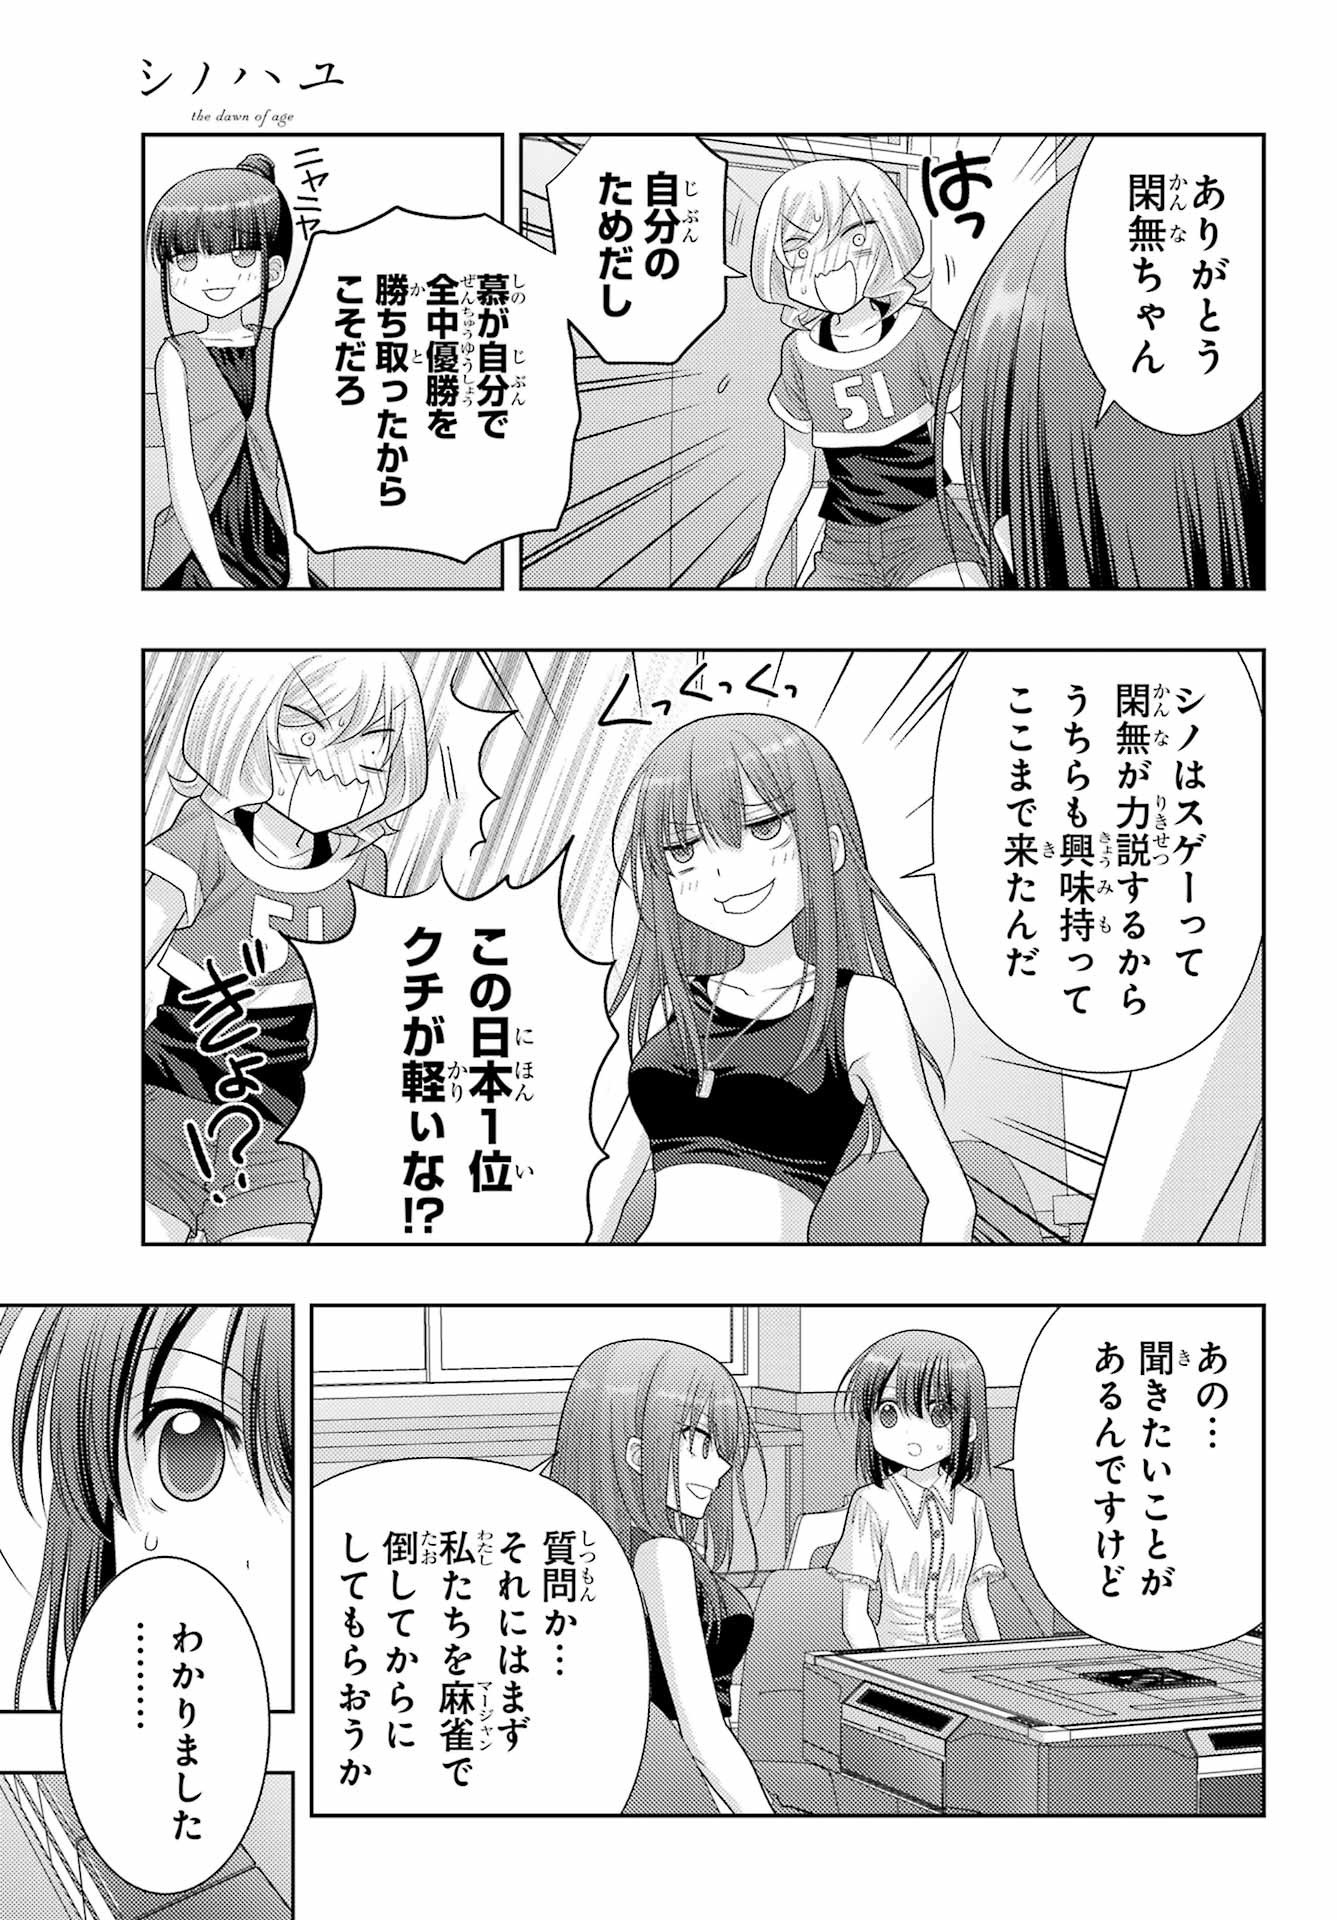 Shinohayu - The Dawn of Age Manga - Chapter 103-2 - Page 13